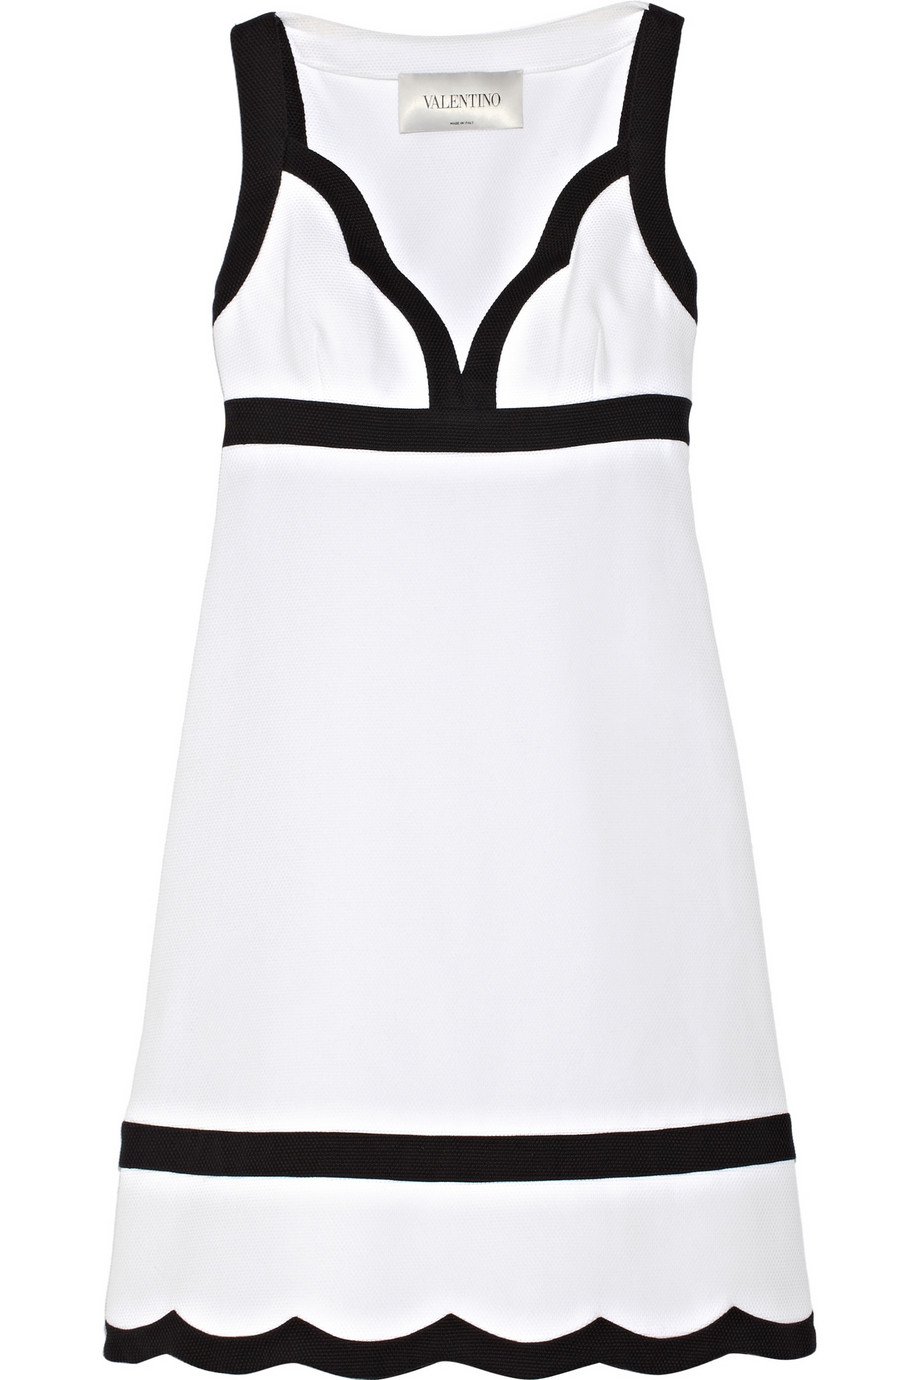 Valentino Cotton-Blend Piquã© Dress in White | Lyst